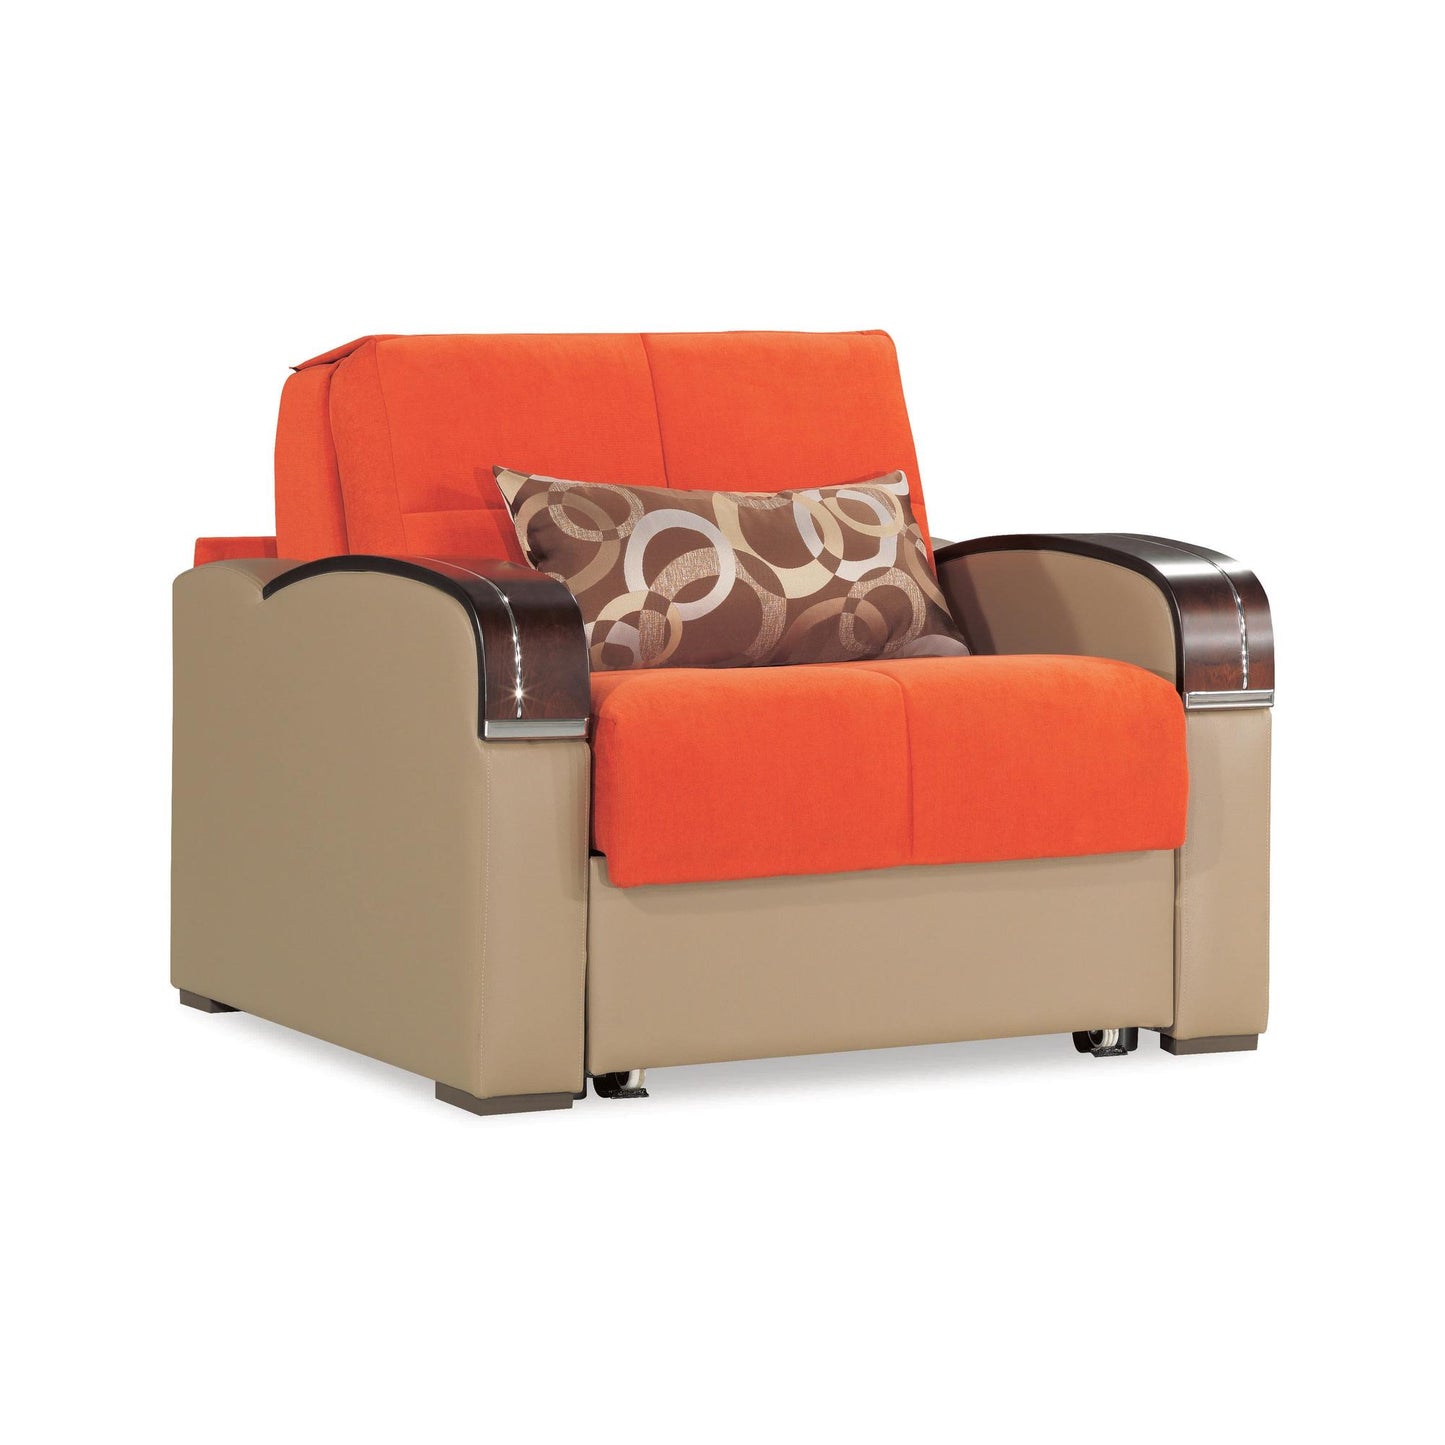 Sleep Plus Convertible Chair in Orange